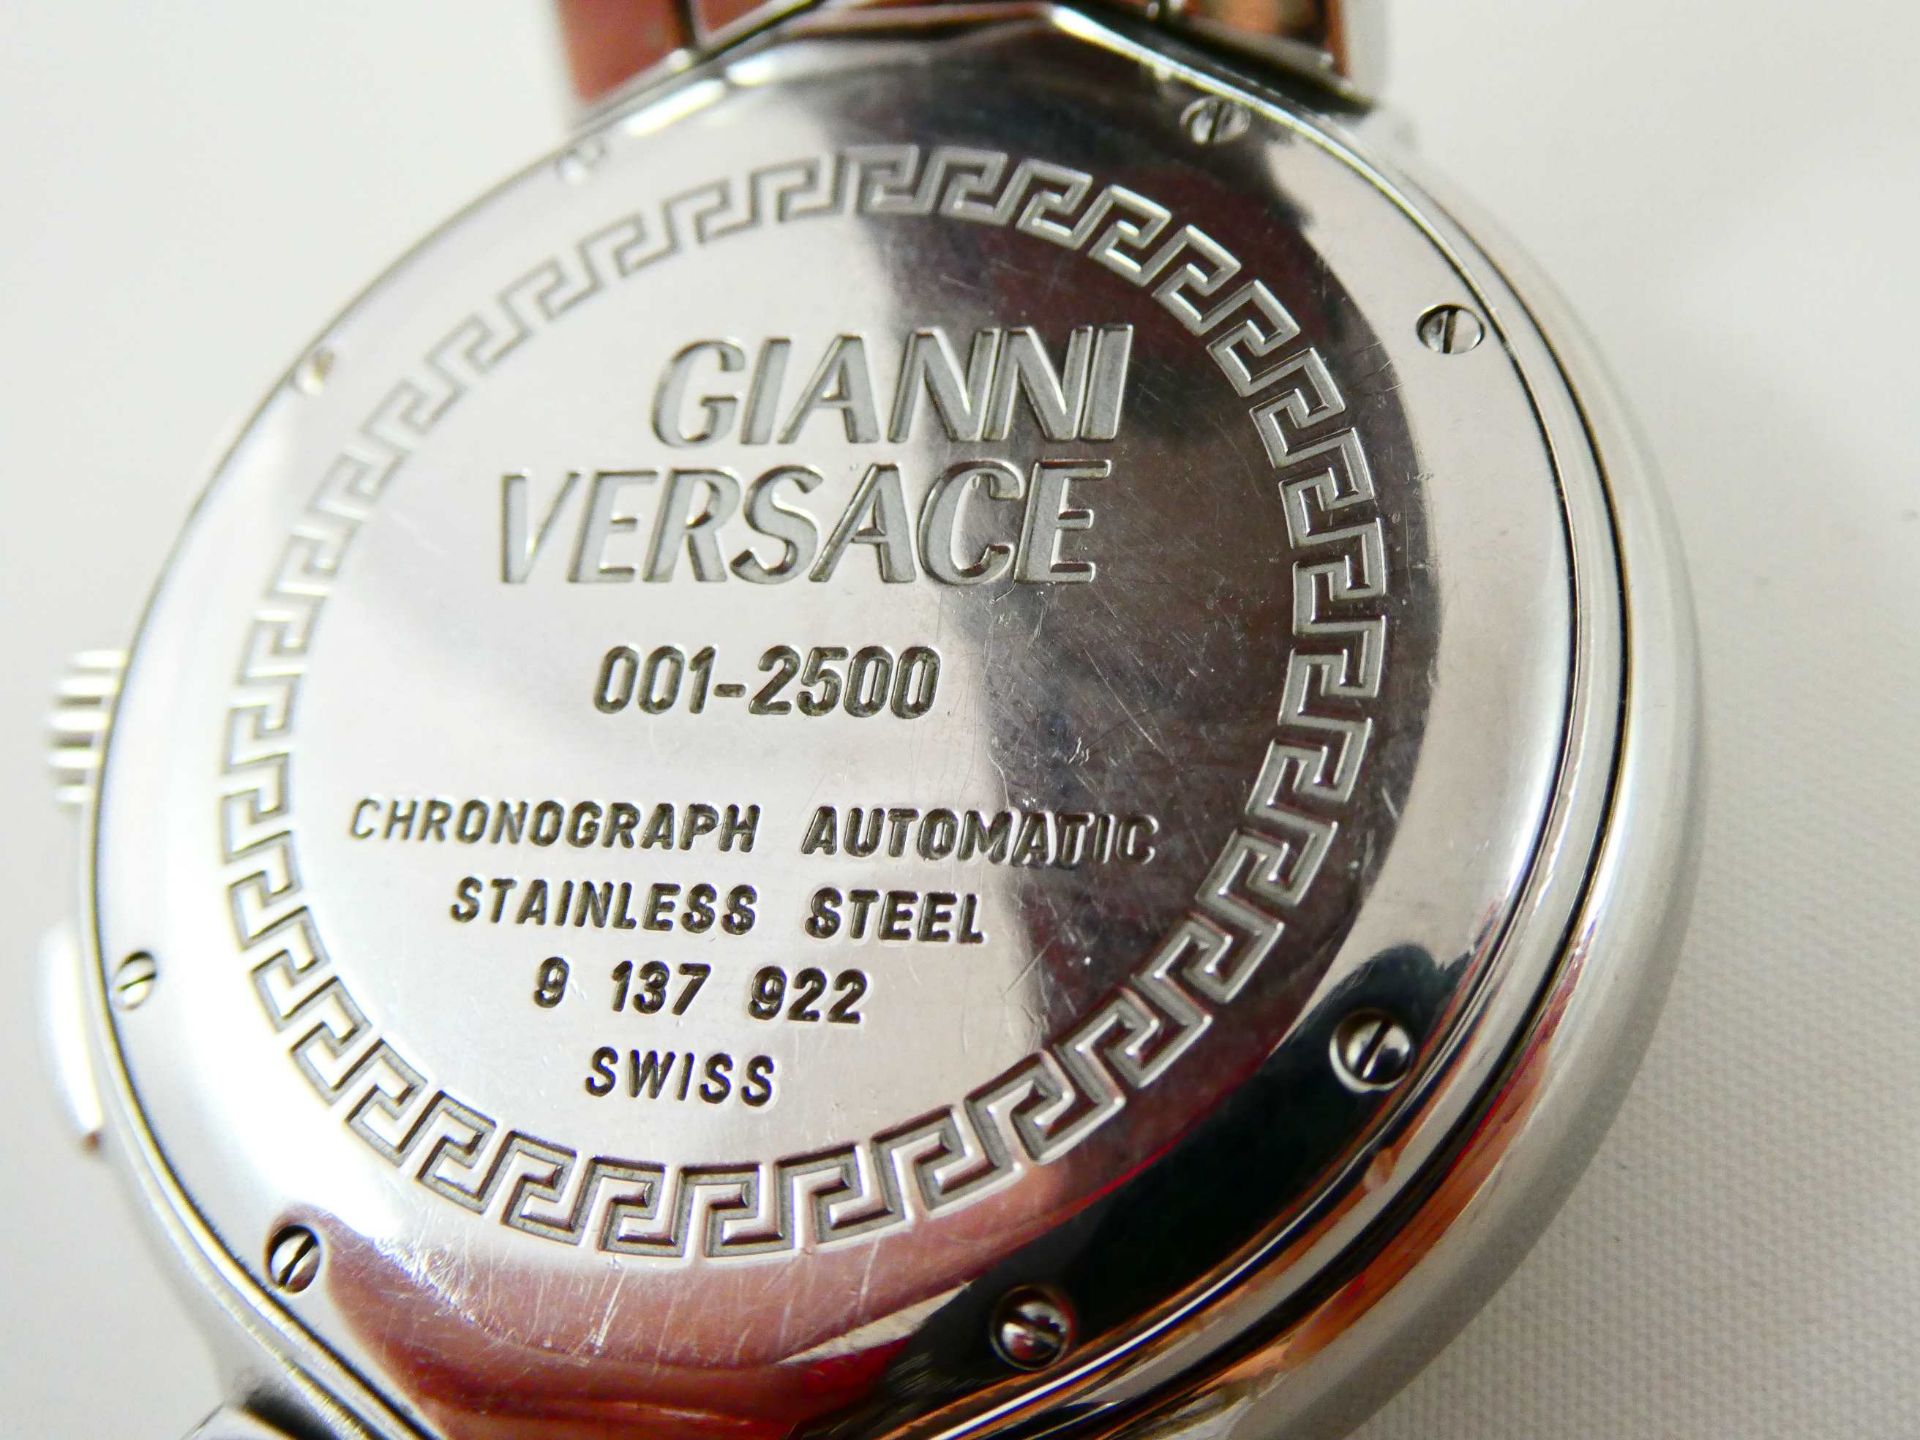 Versace Chronograph "Gianni Versace" - Image 2 of 4